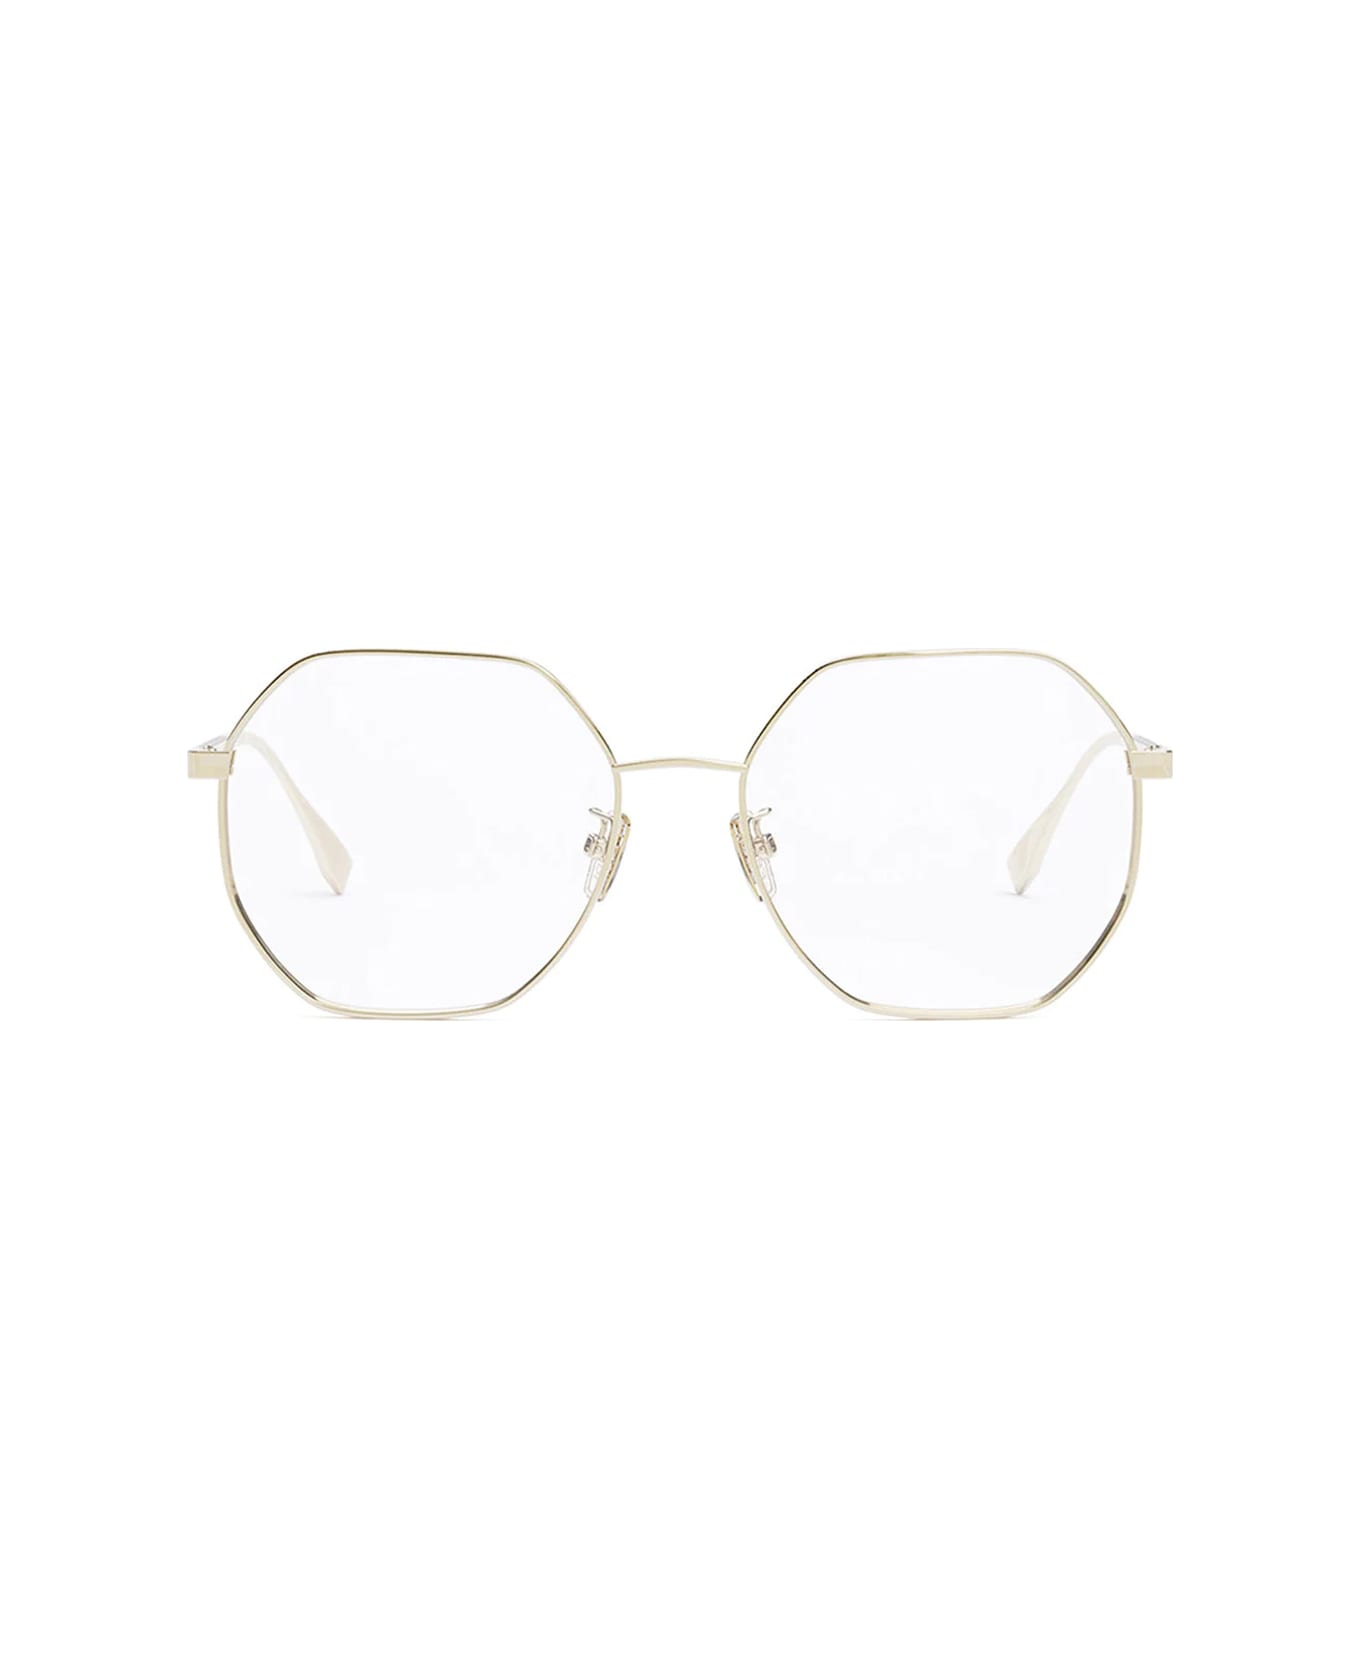 Fendi Eyewear Fe50053u 030 Glasses - Oro